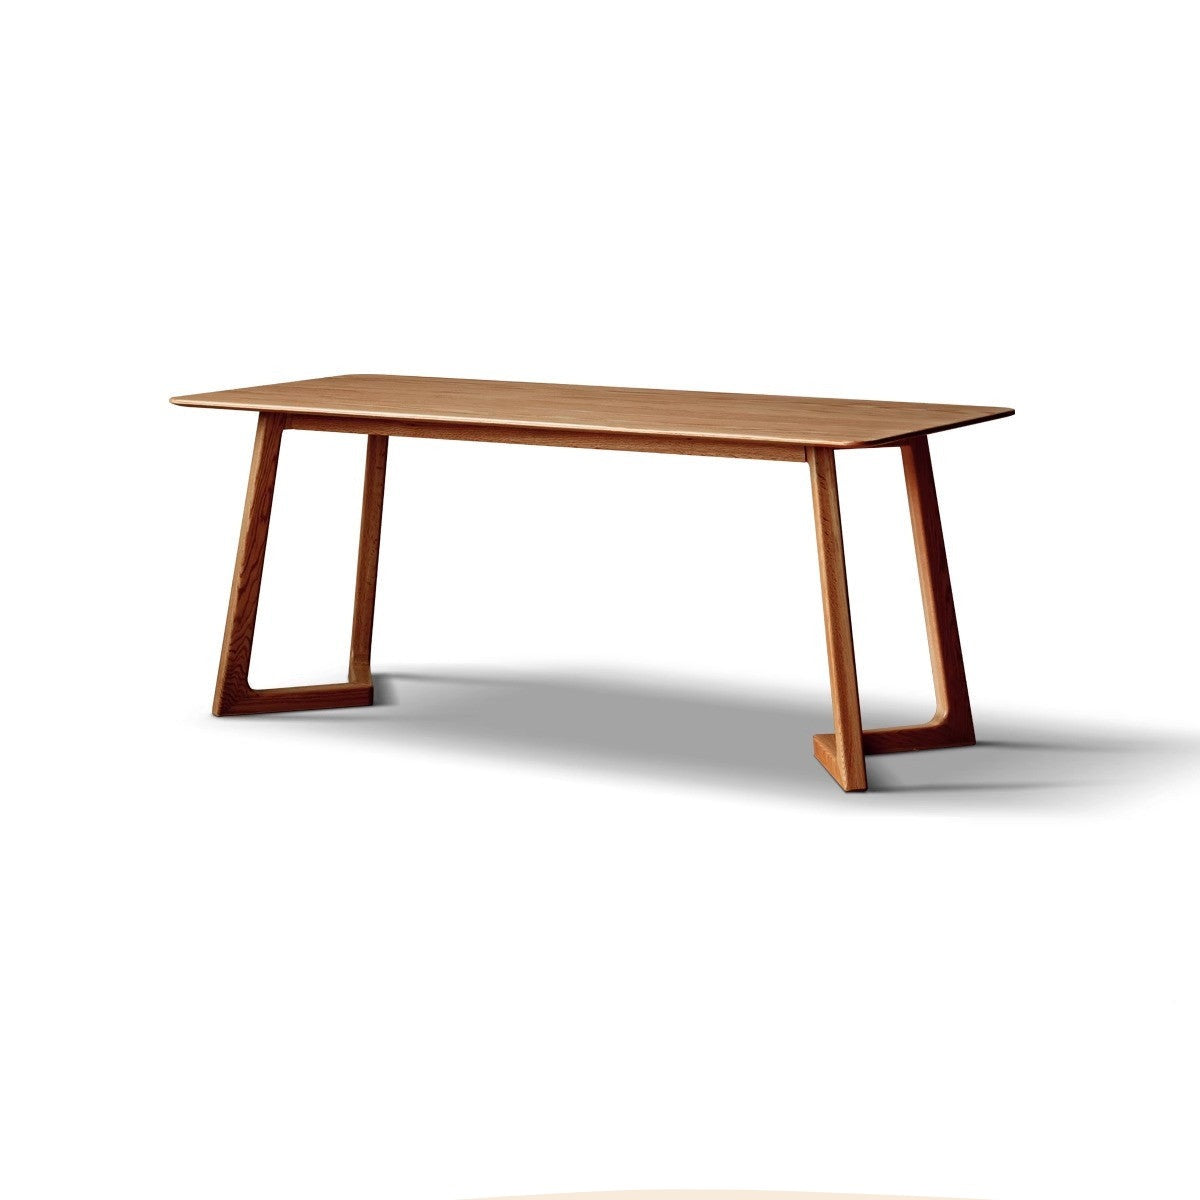 Oak solid wood large office desk-